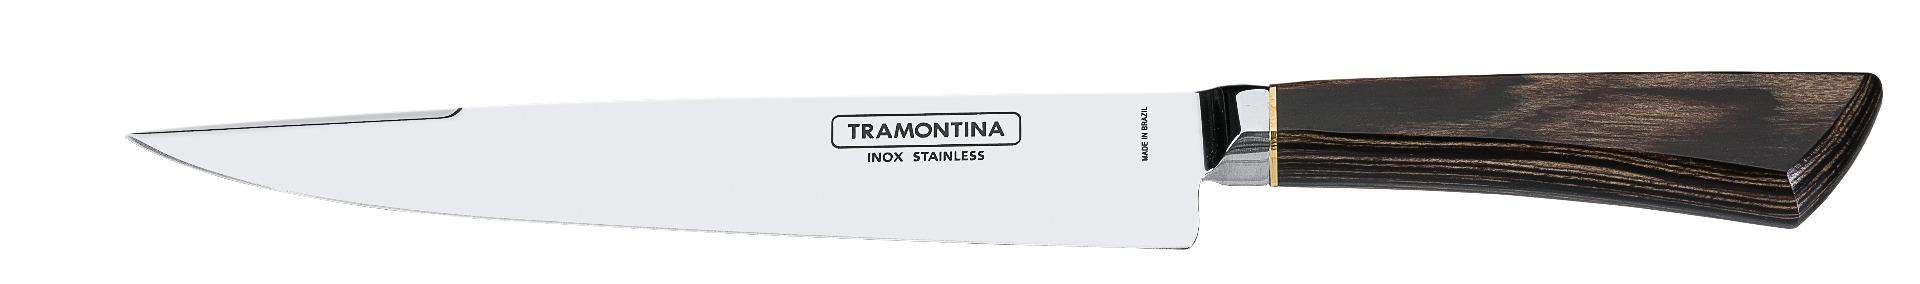 سكين للحوم 8 انش ترامونتينا Tramontina Meat Knife